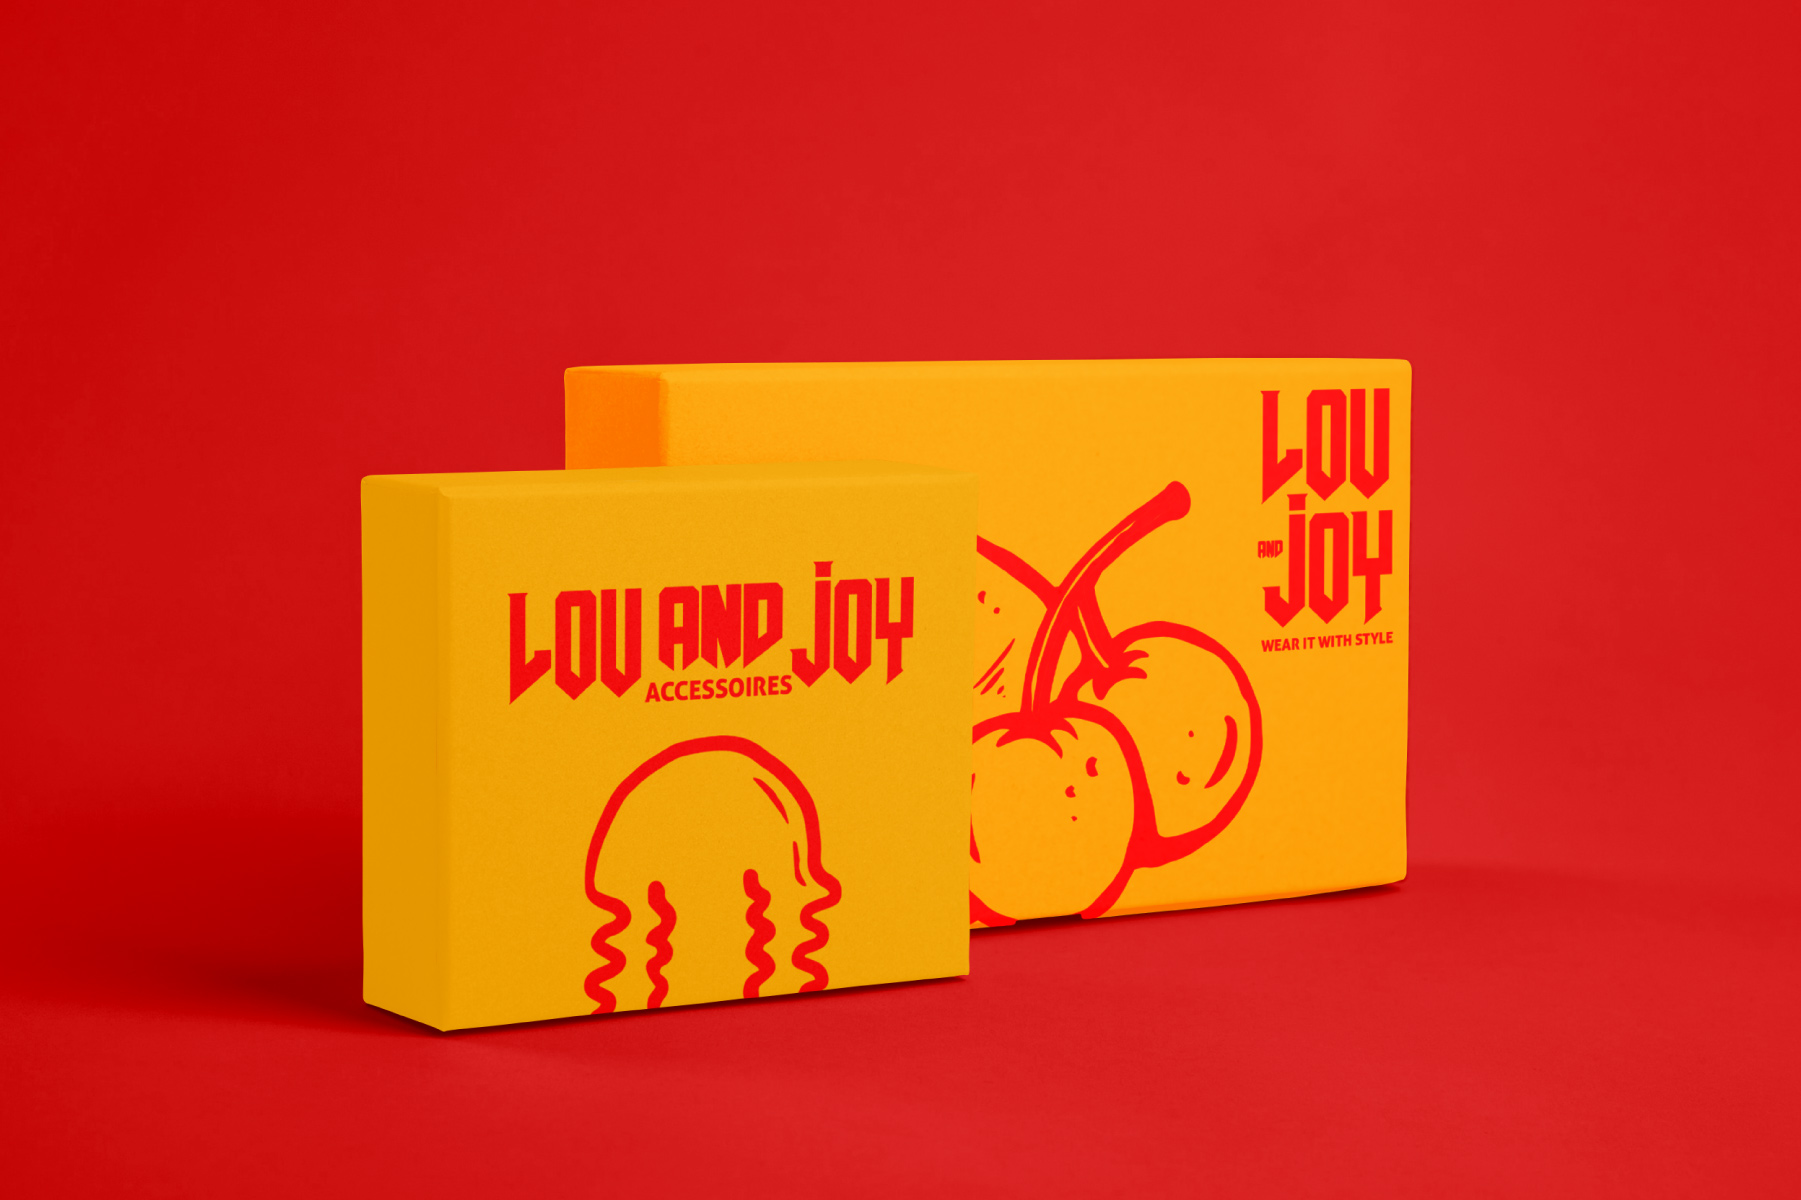 Branding Identity for a New Brand of Sunglasses for Women Called Lou&Joy